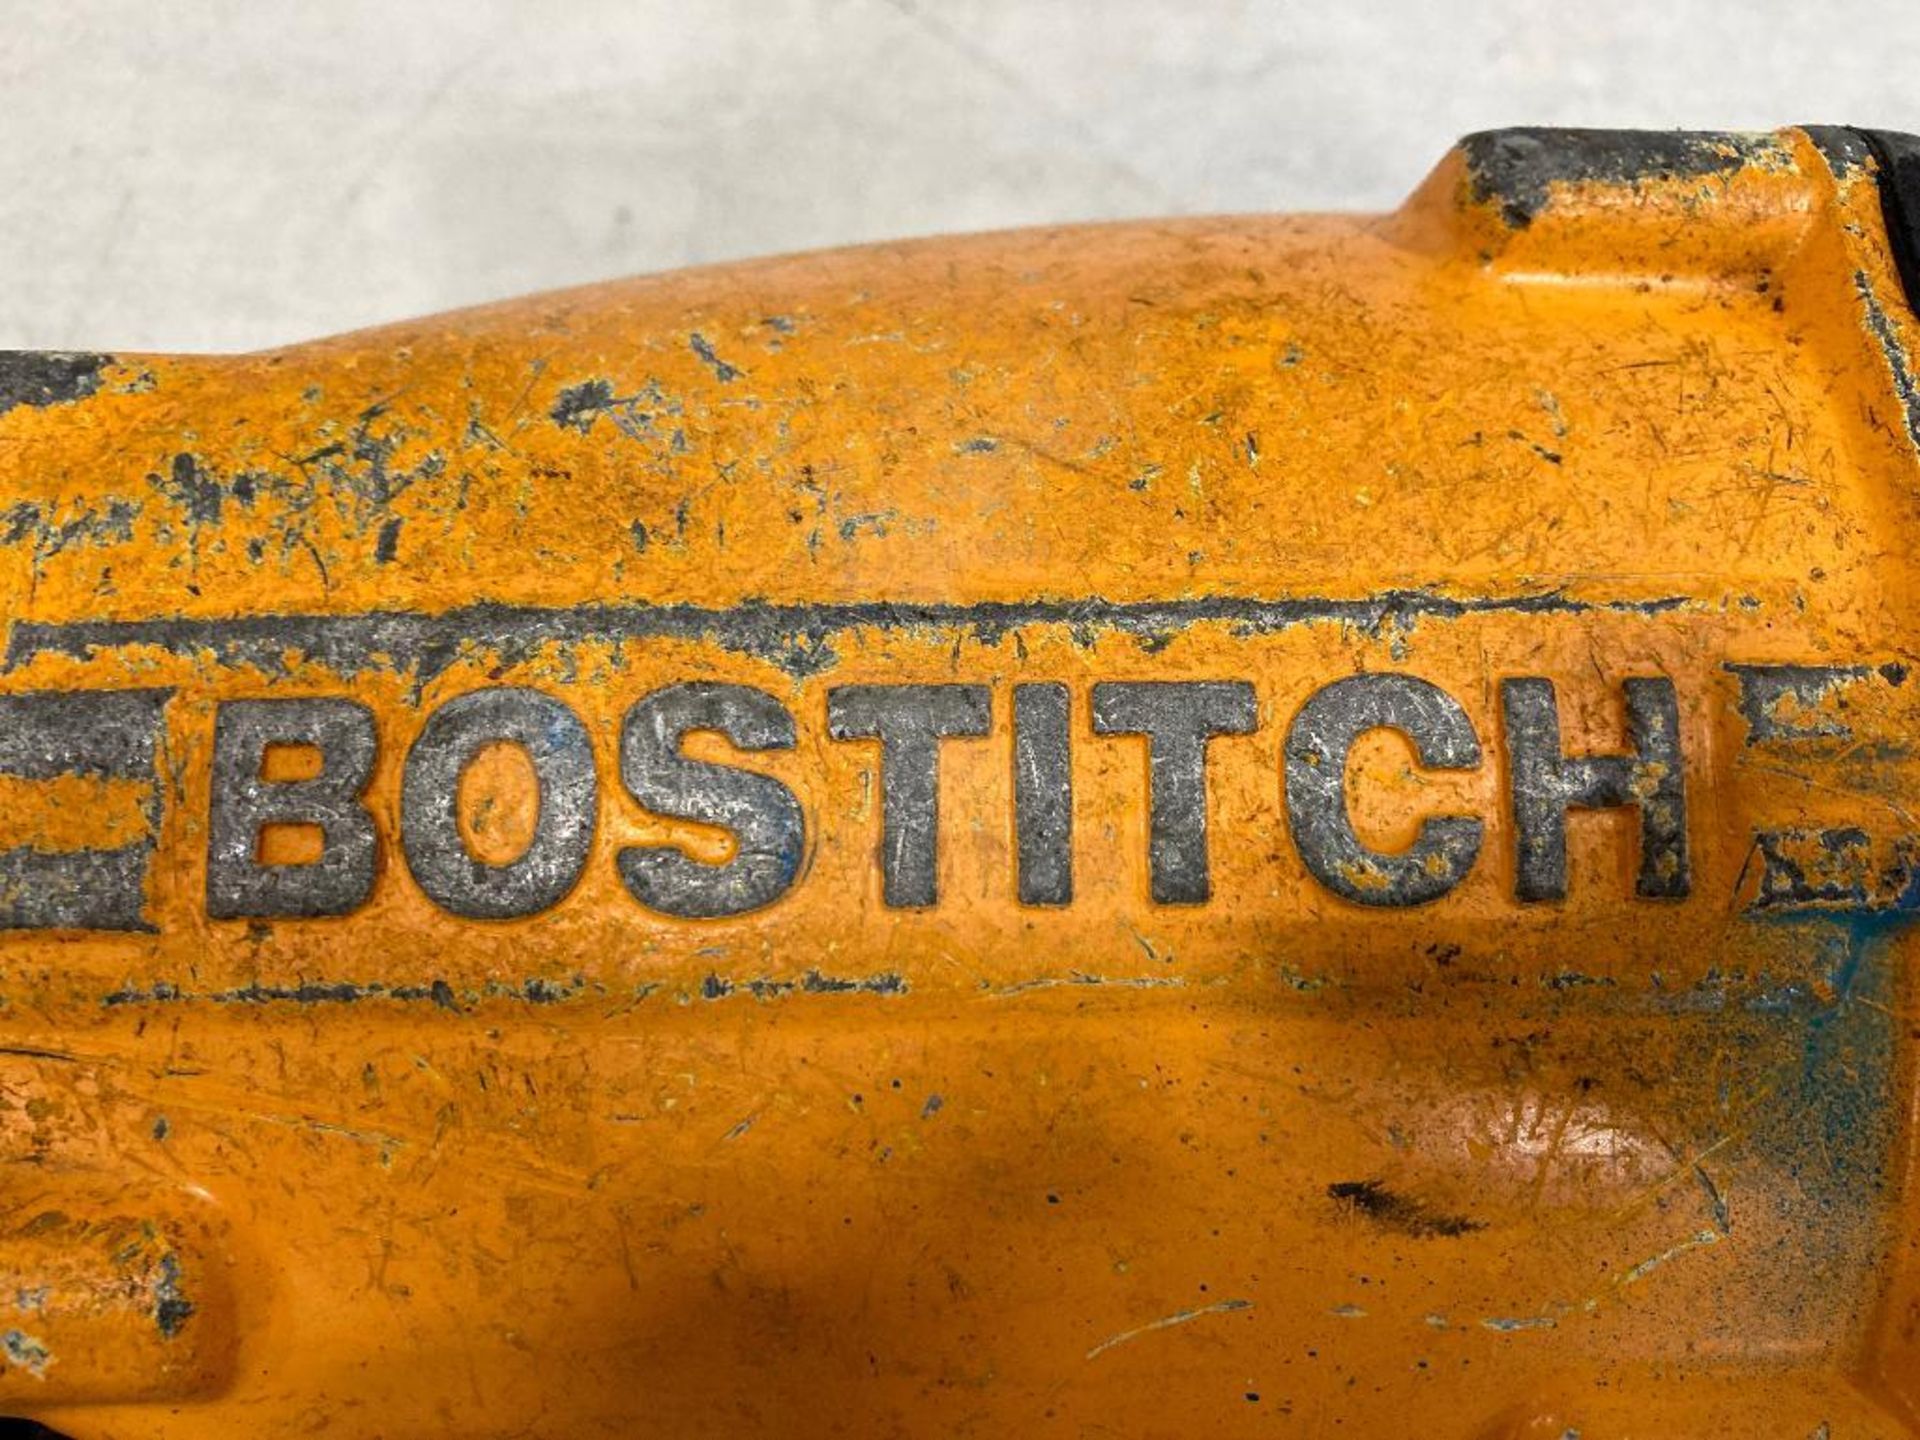 Bostitch Pneumatic Nailer - Image 4 of 4